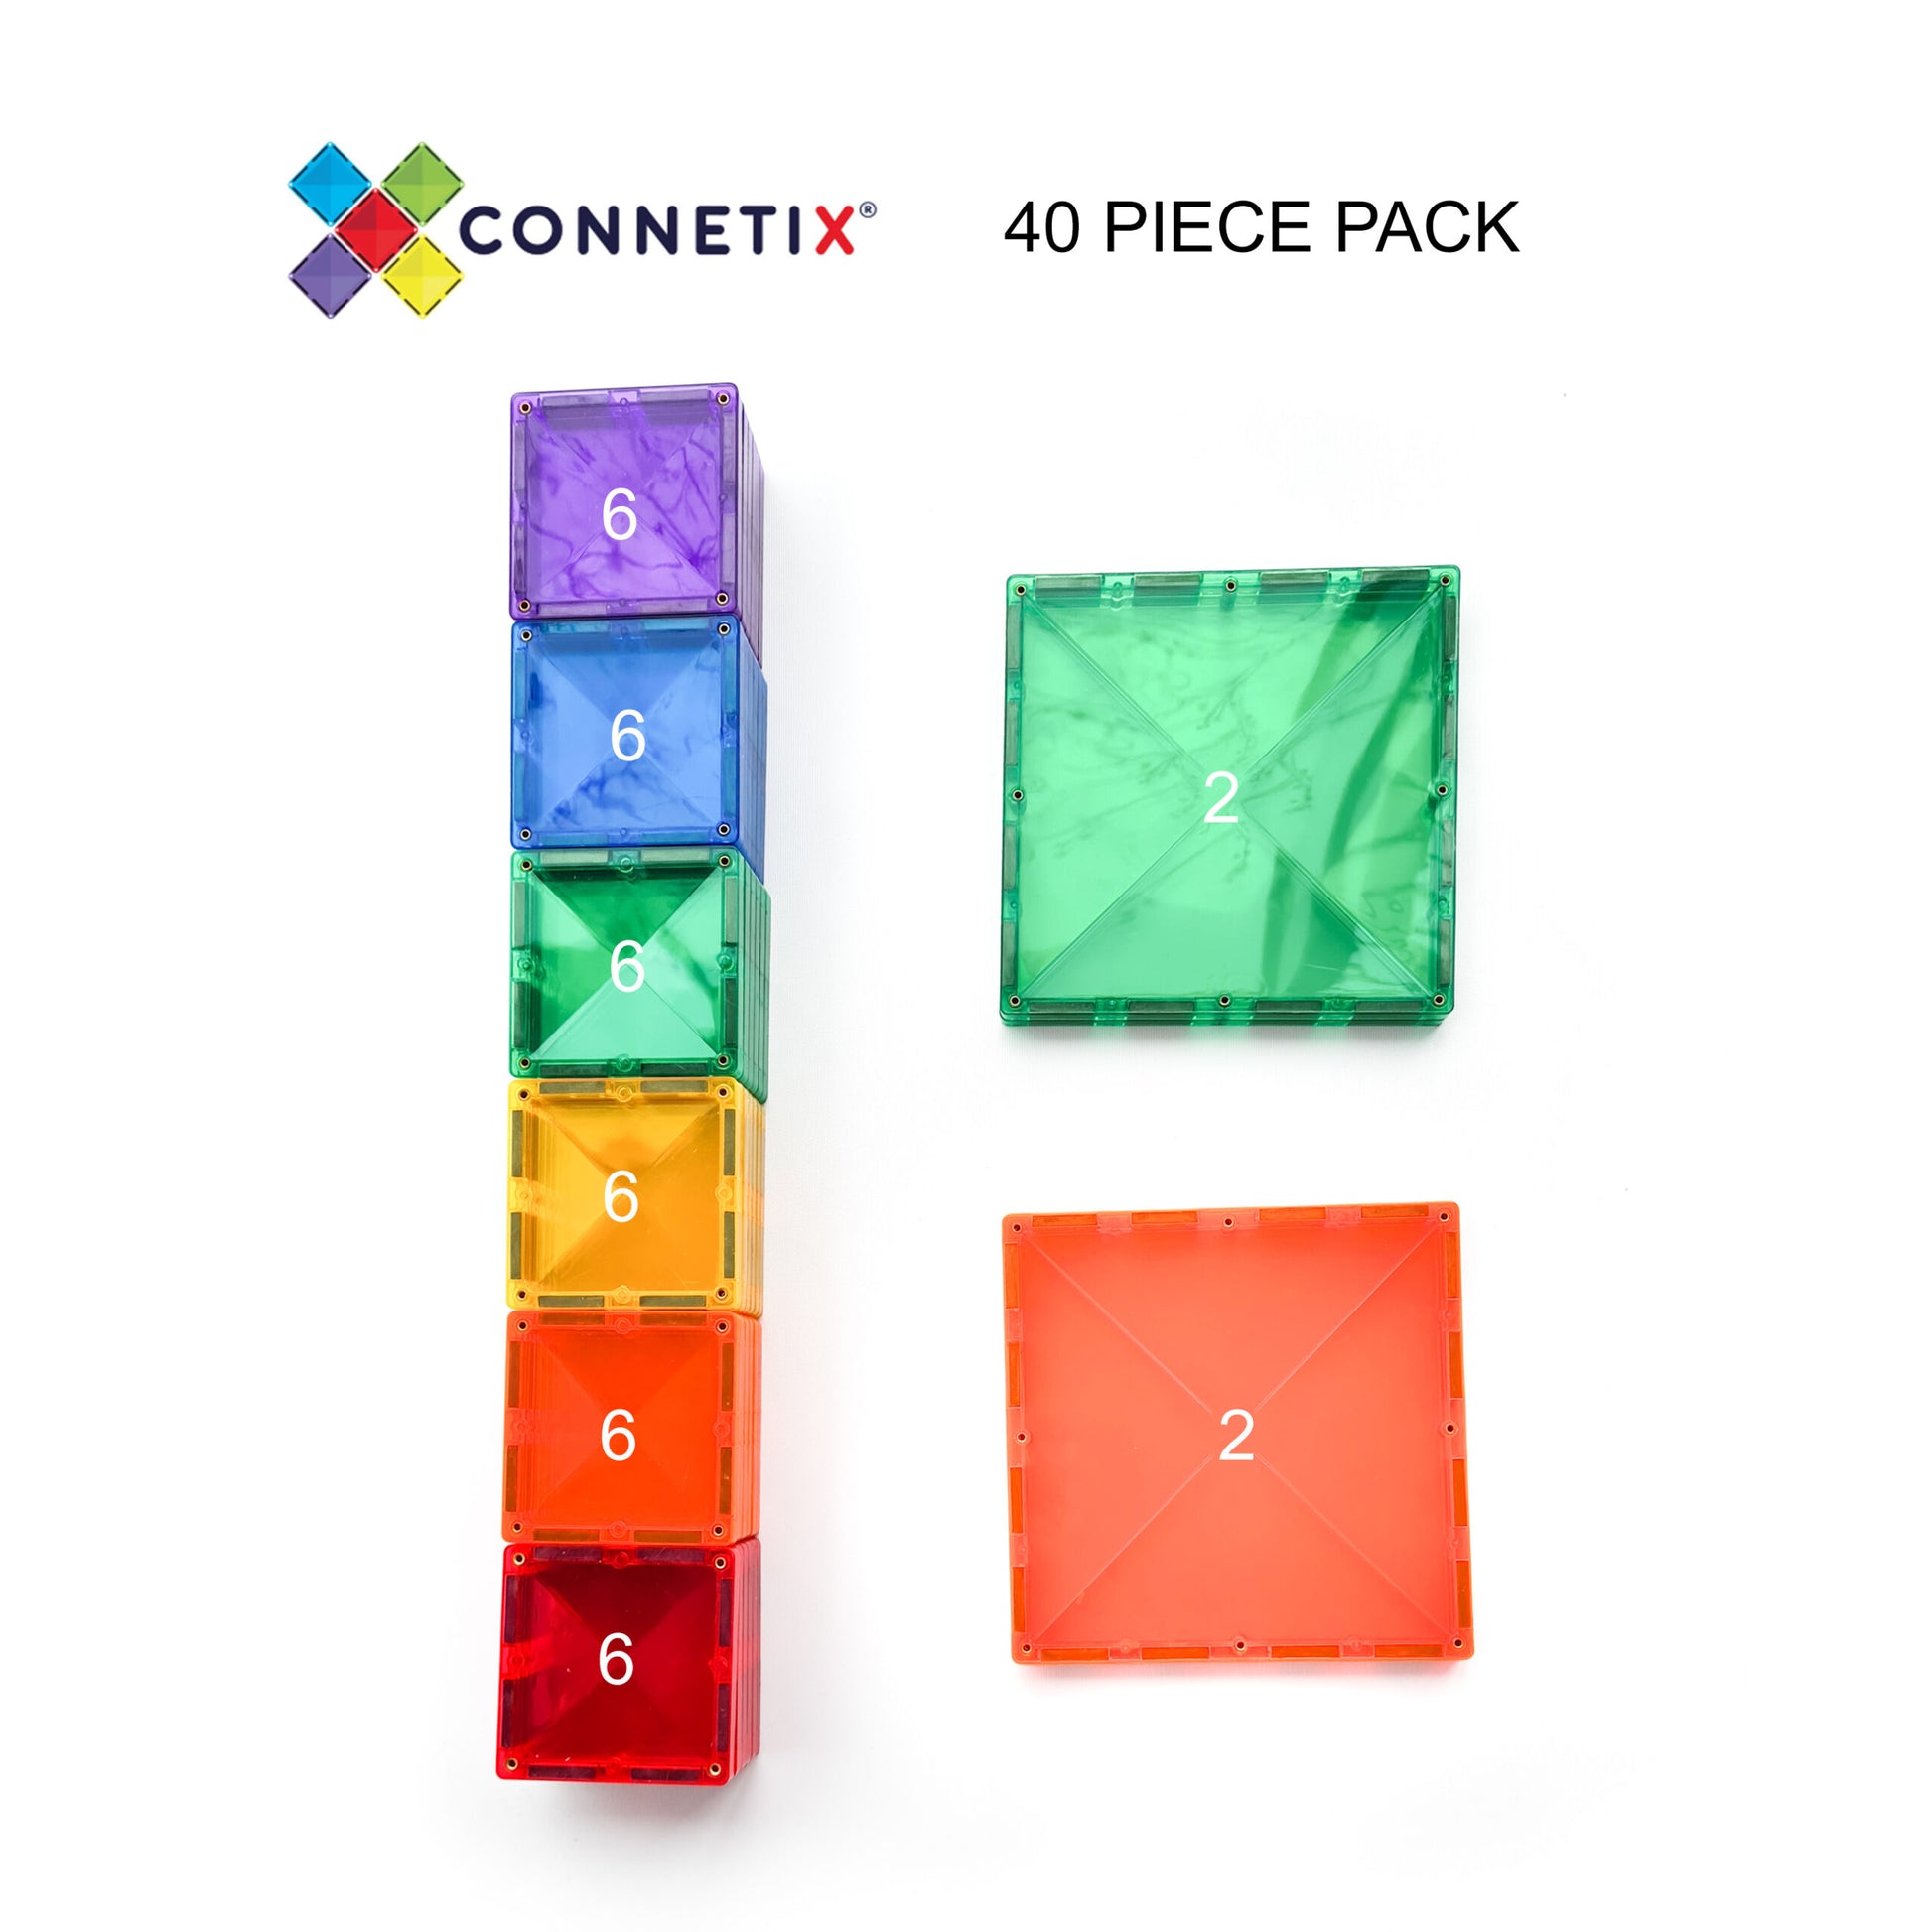 Connetix 40 piece pack